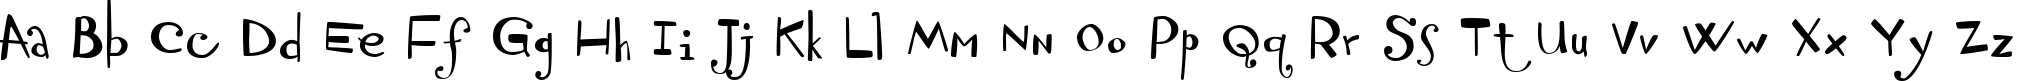 Пример написания английского алфавита шрифтом DayDream